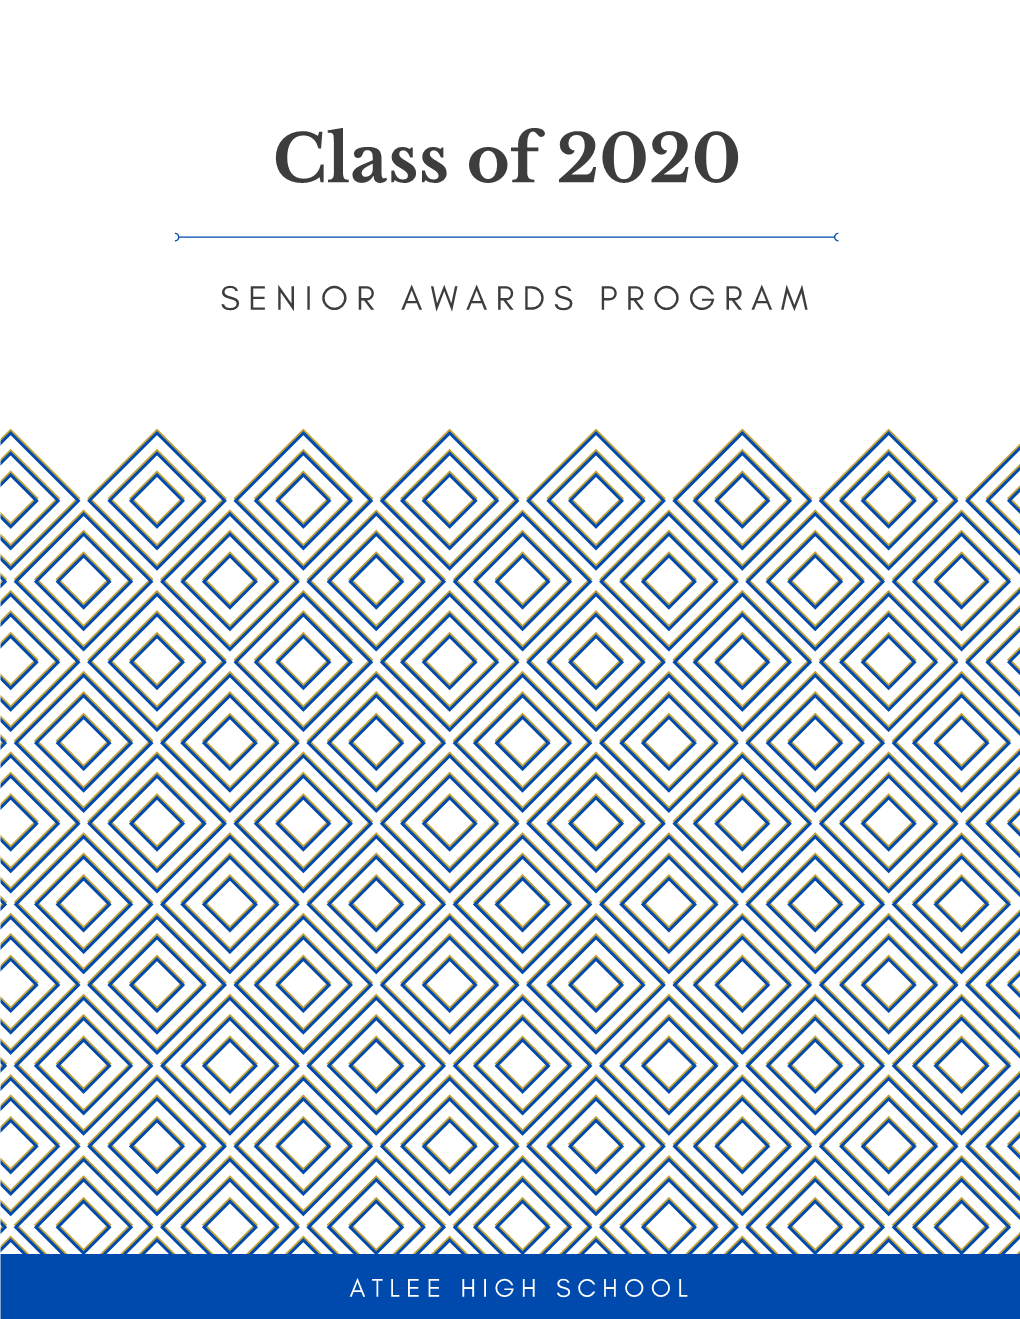 AHS Senior Awards Program 2020